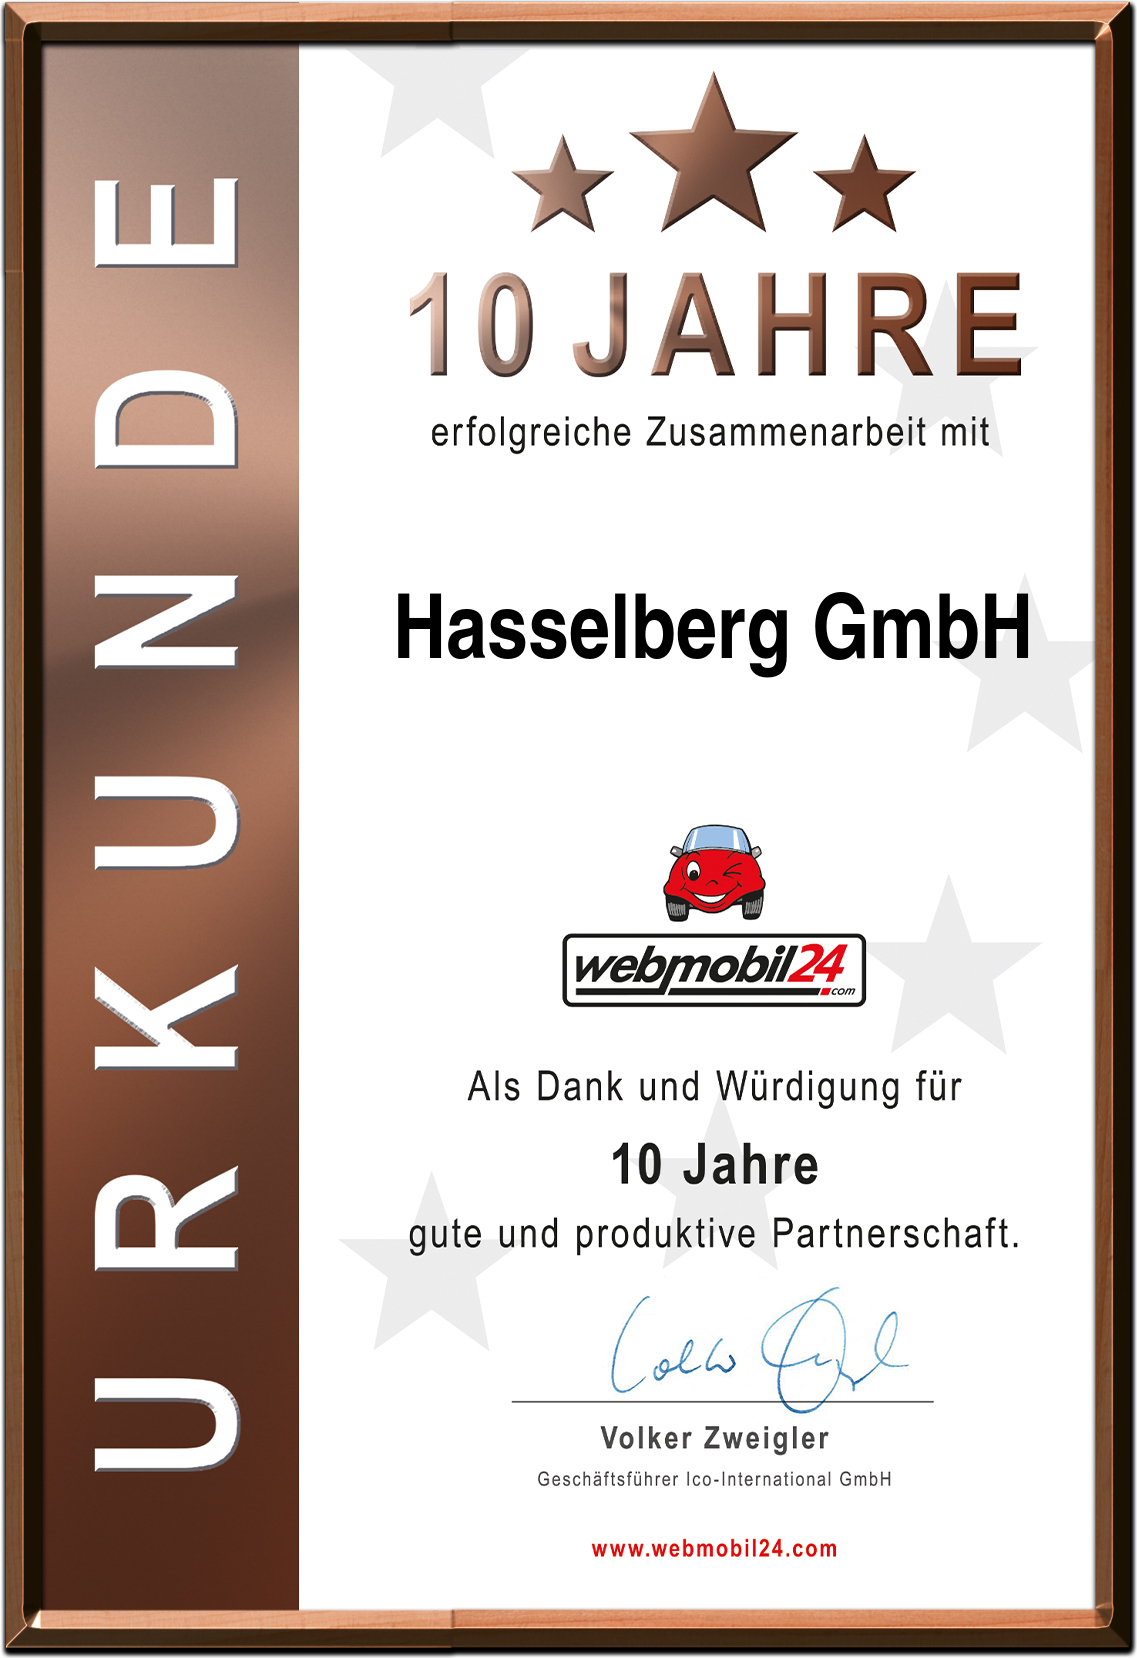 Hasselberg GmbH